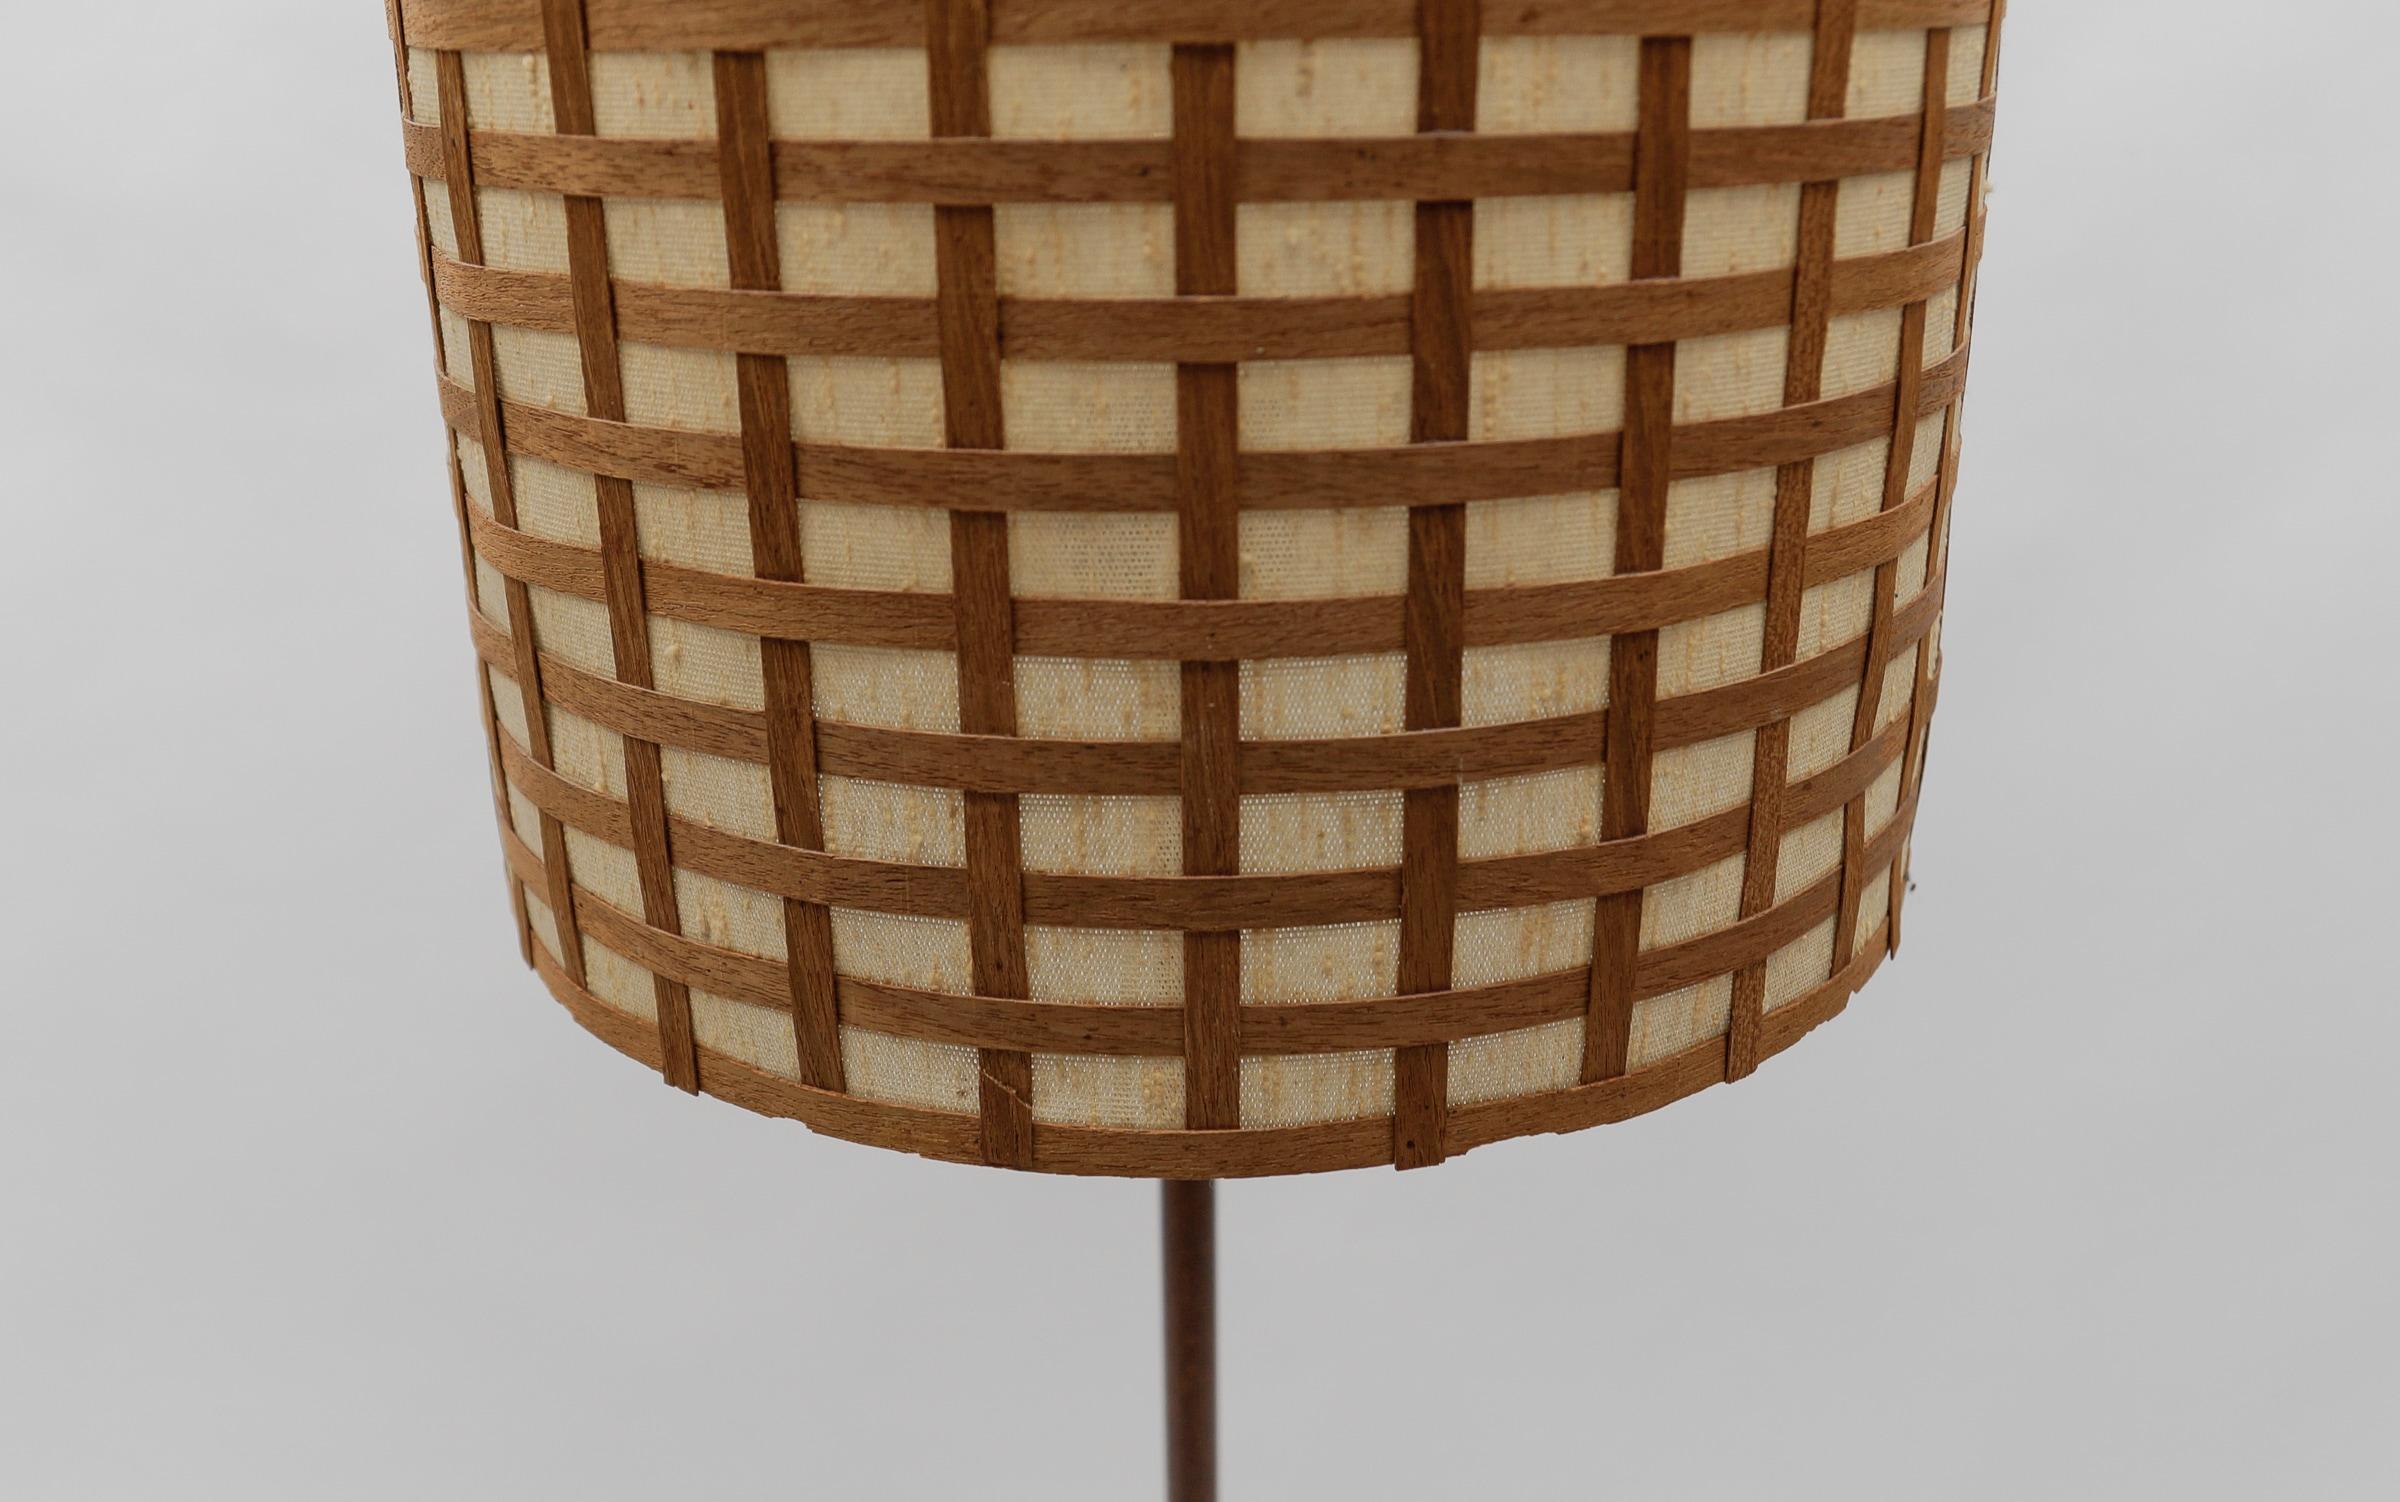  Mid-Century Modern Floor Lamp in Brass and Teak from Temde, 1960s Switzerland For Sale 5